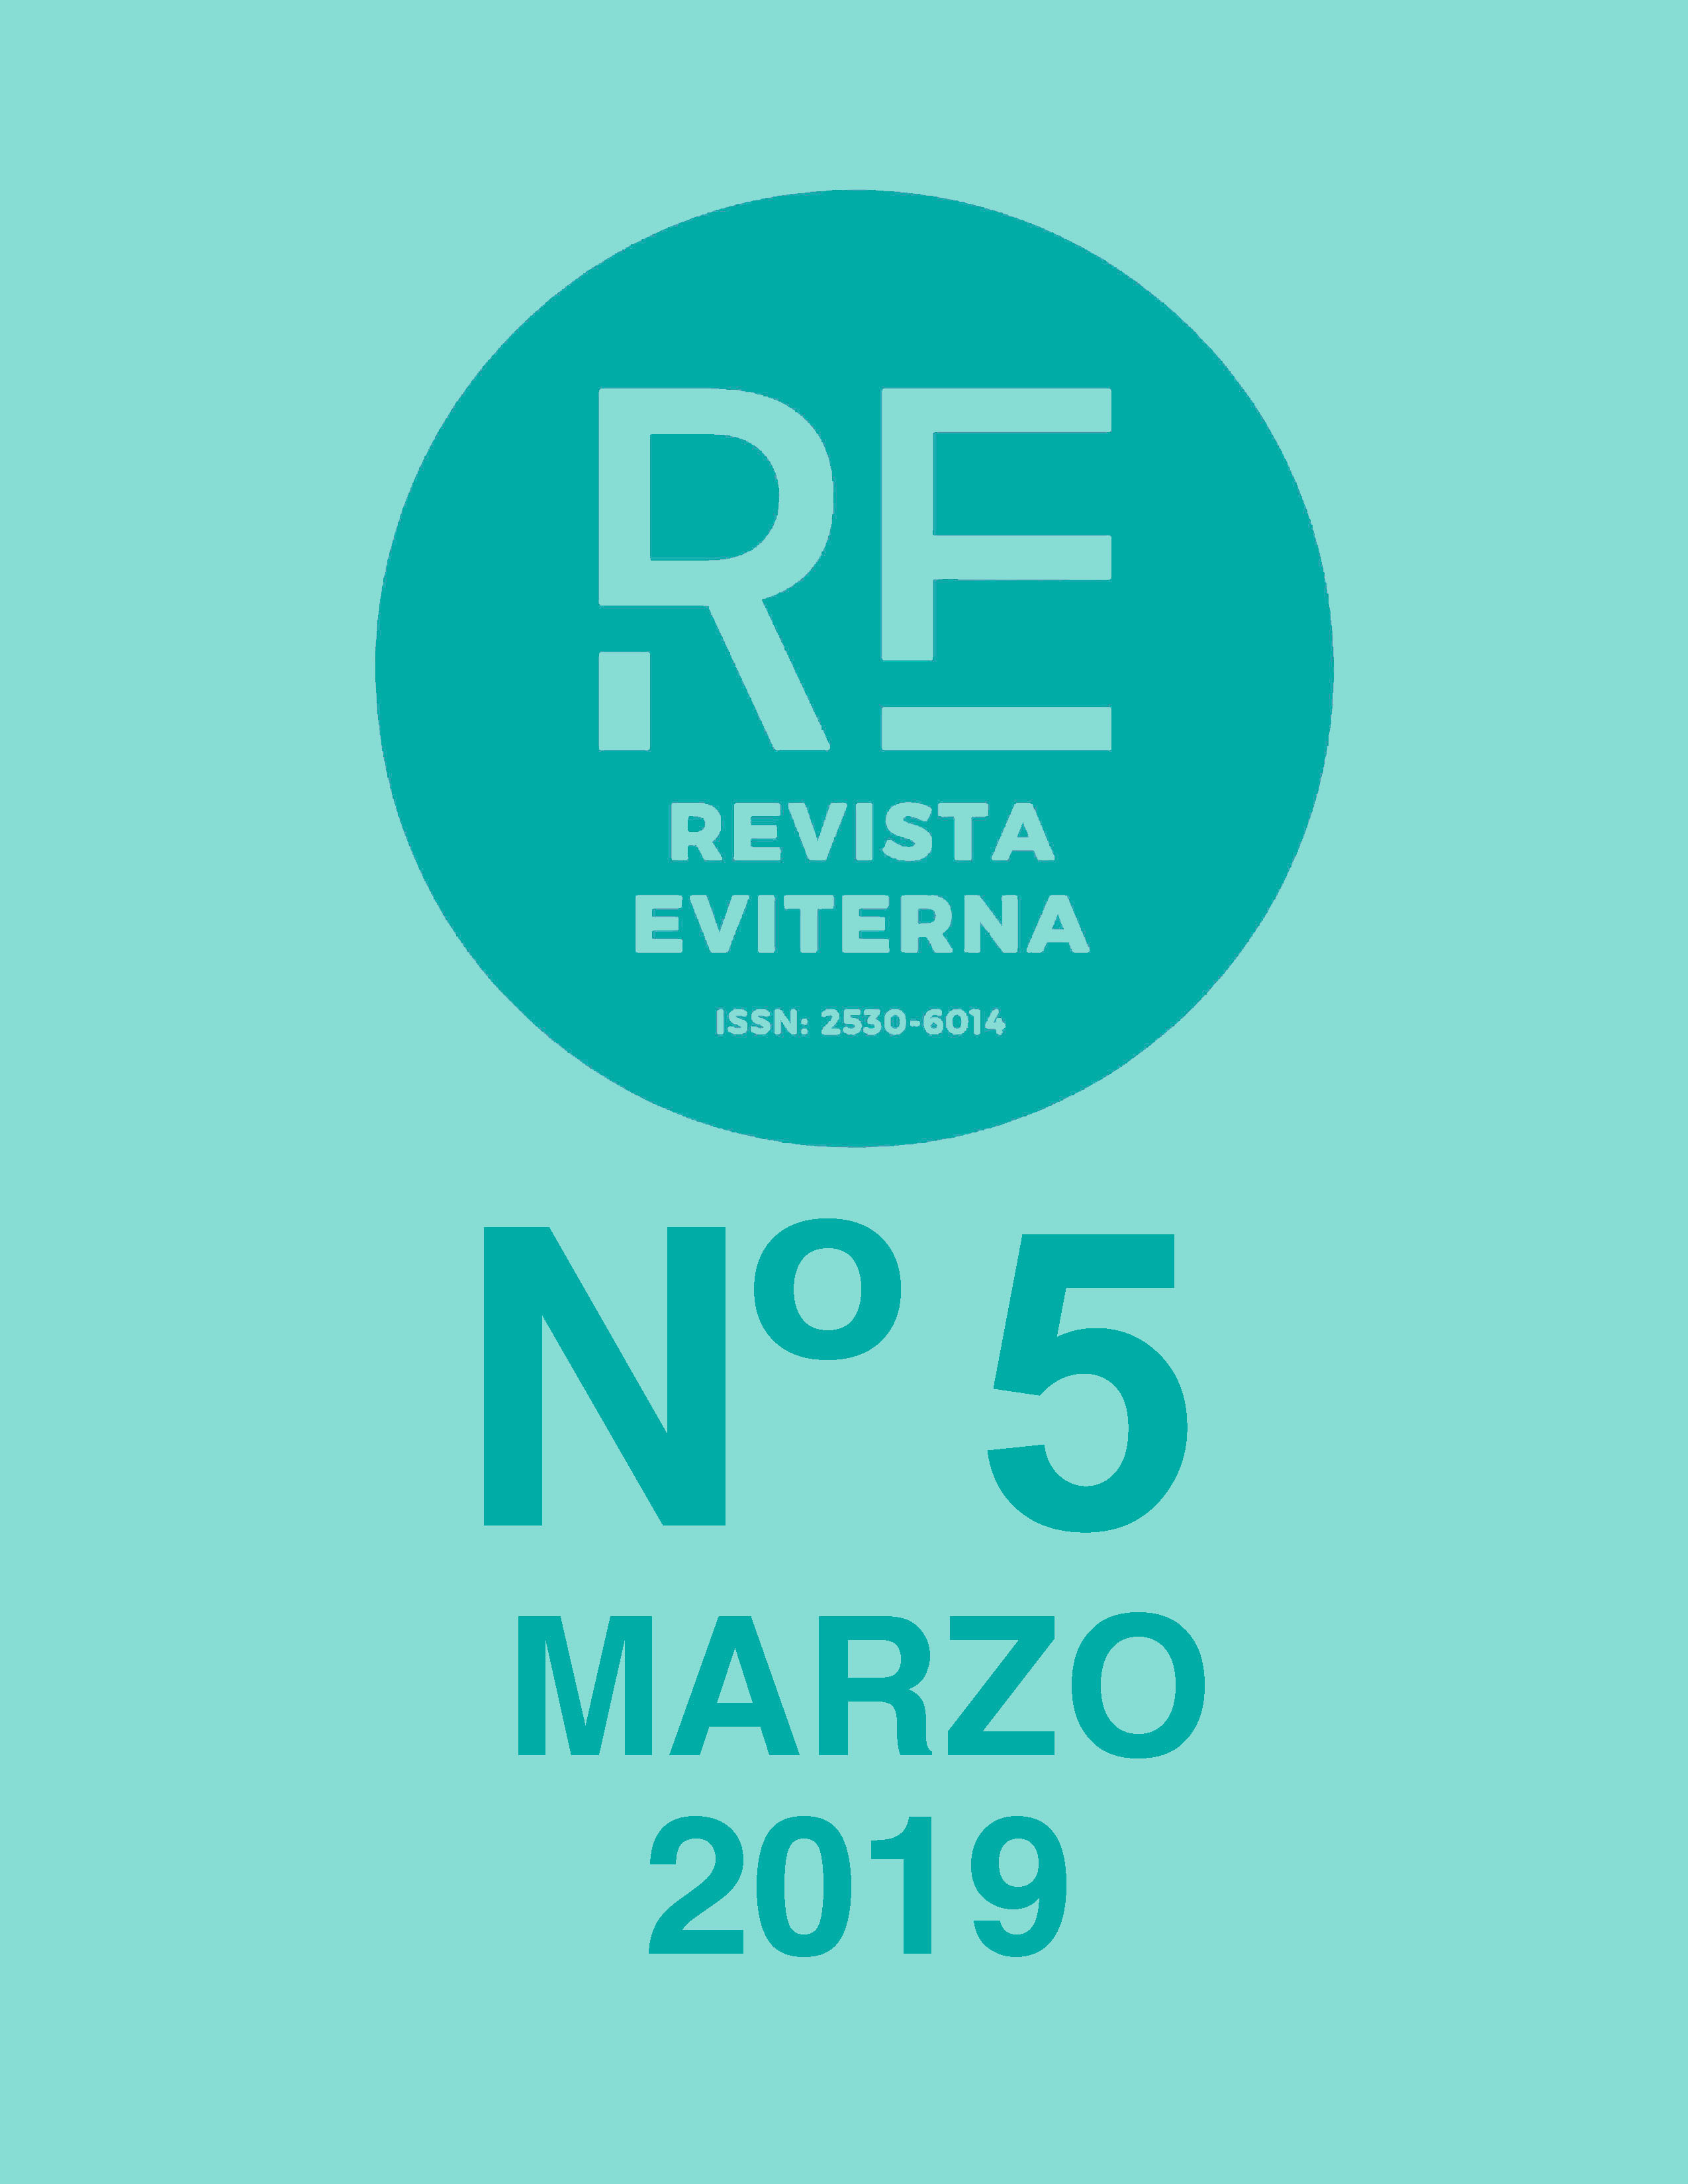 					View No. 5 (2019): Revista Eviterna Nº 5, marzo 2019
				